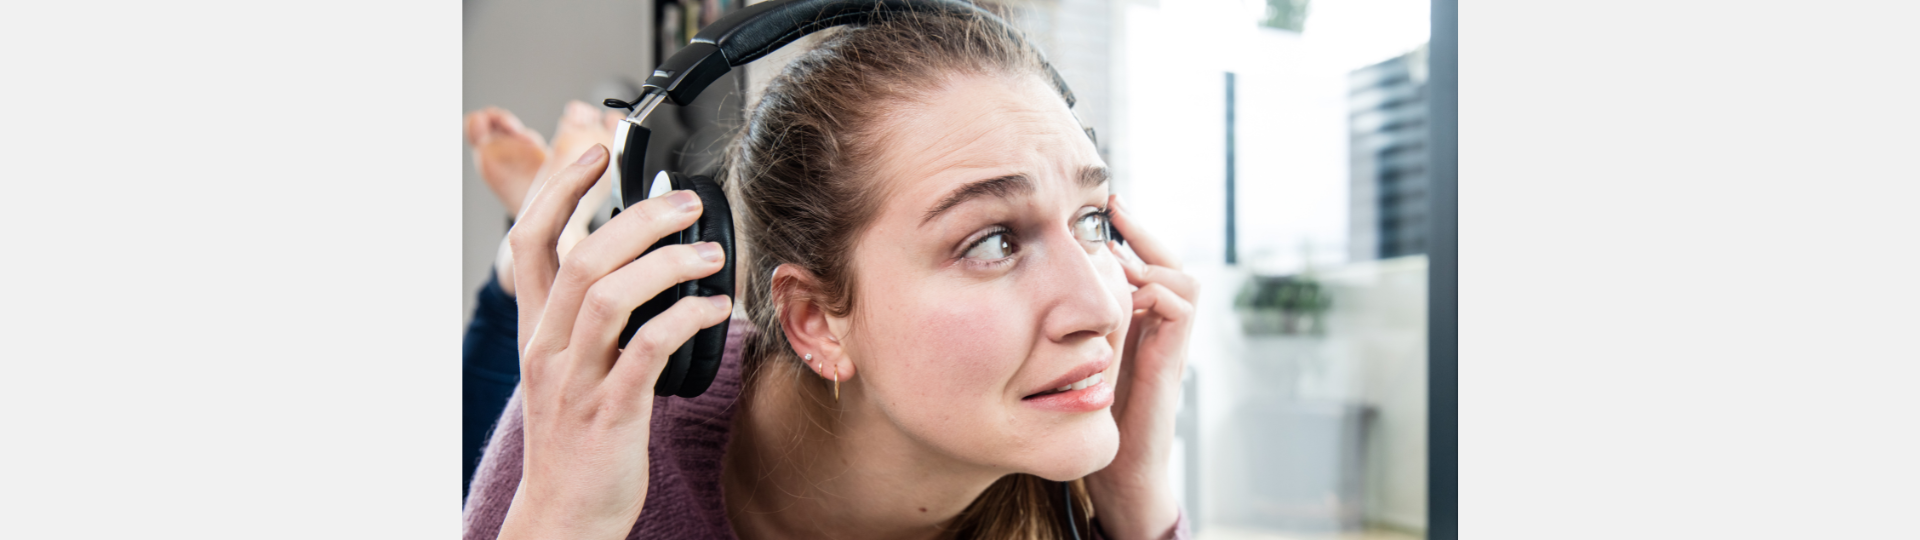 woman wearing headphones who looks like she is in pain